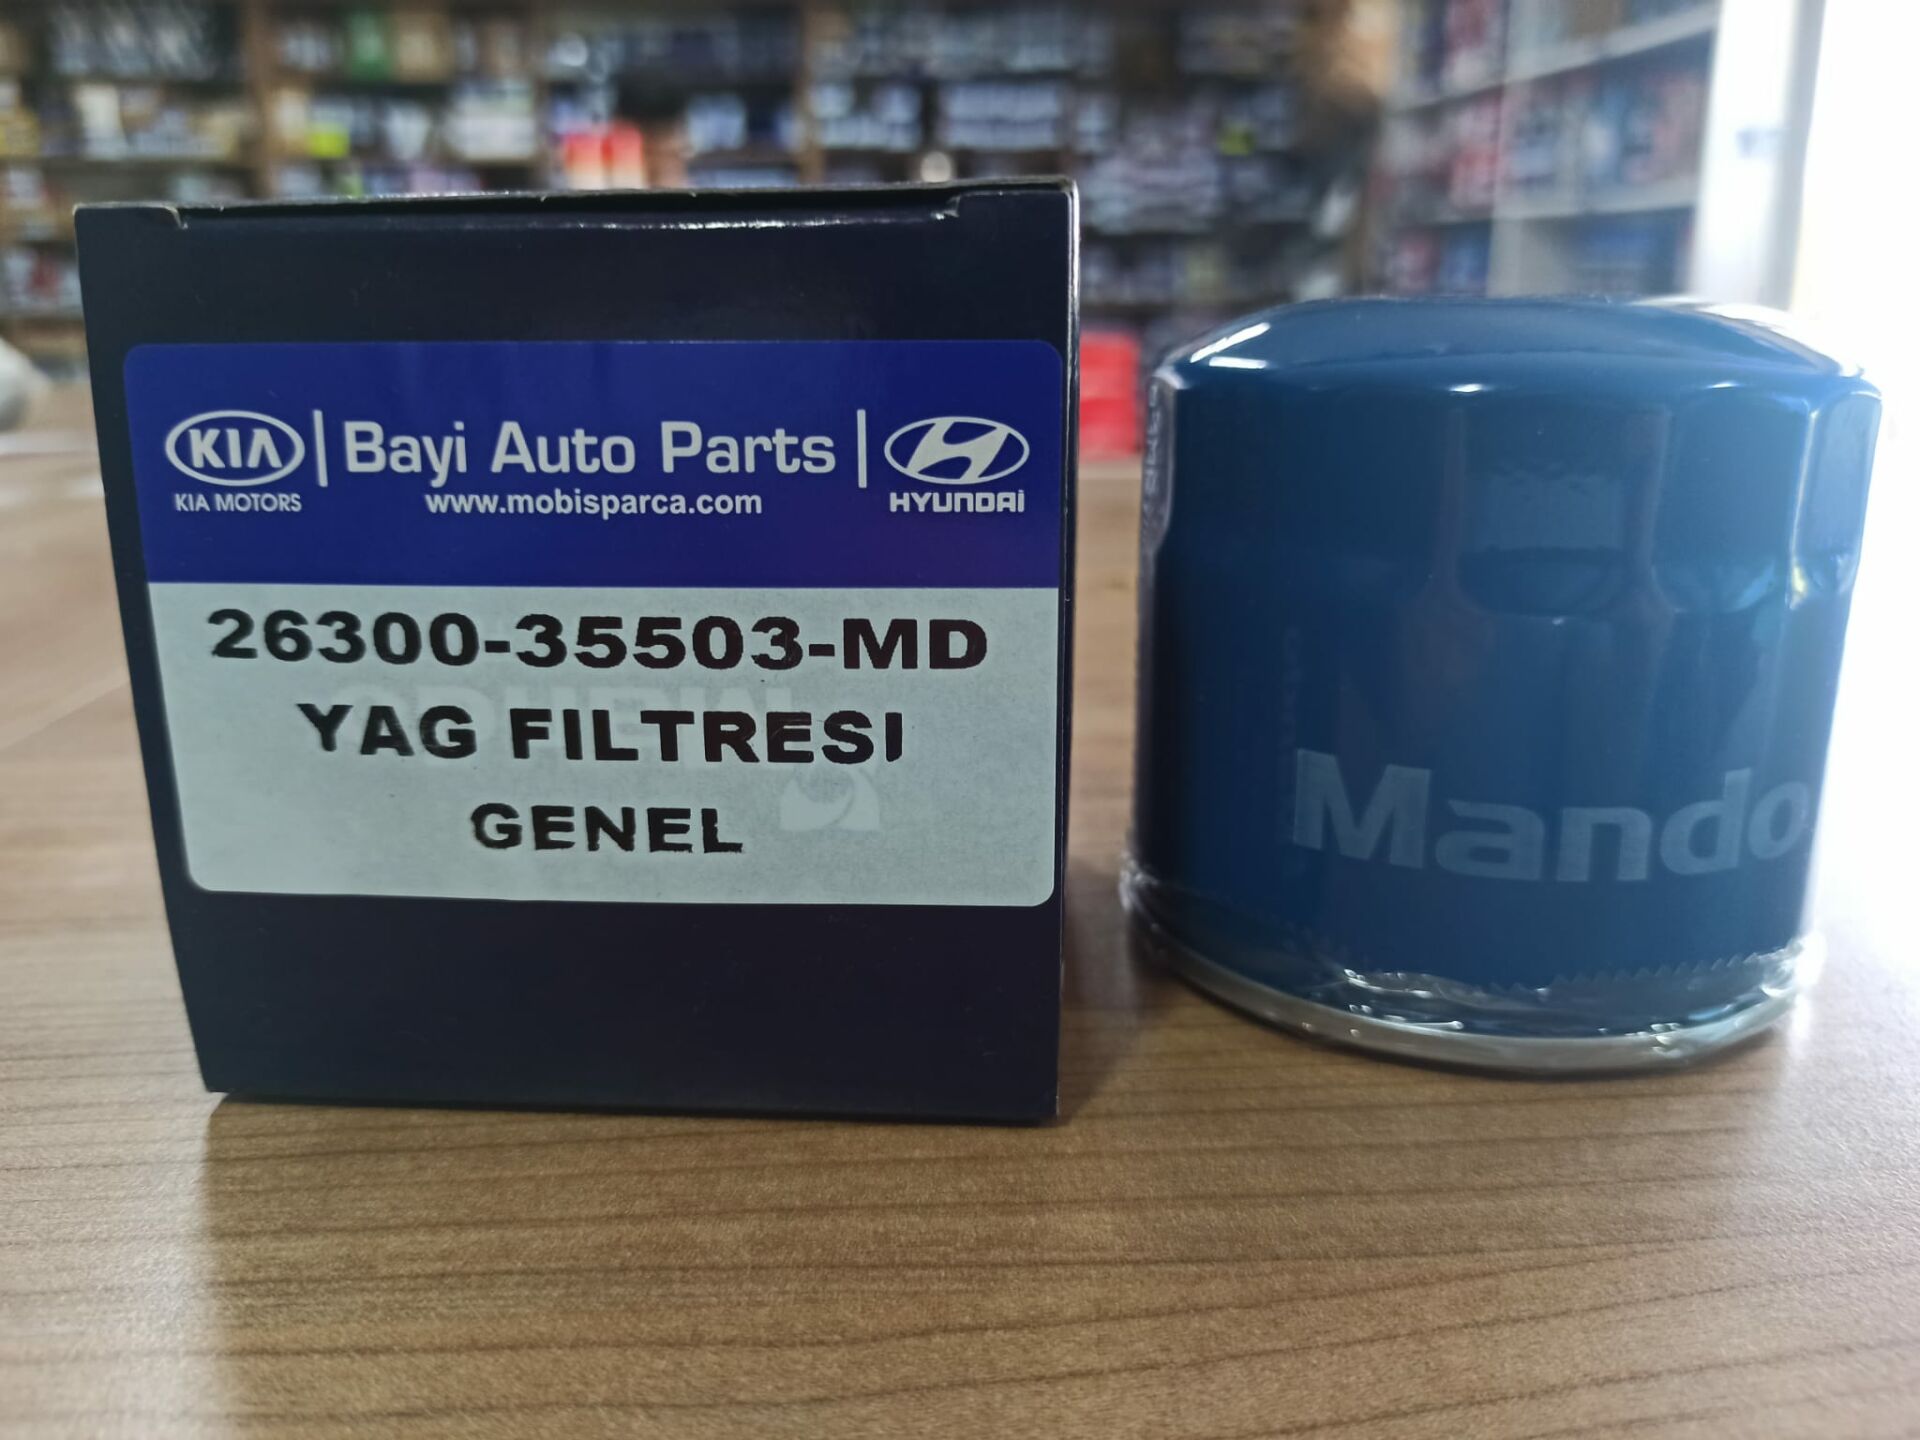 Mando Yağ Filtresi (Kia - Hyundai Araçlarla Uyumludur)